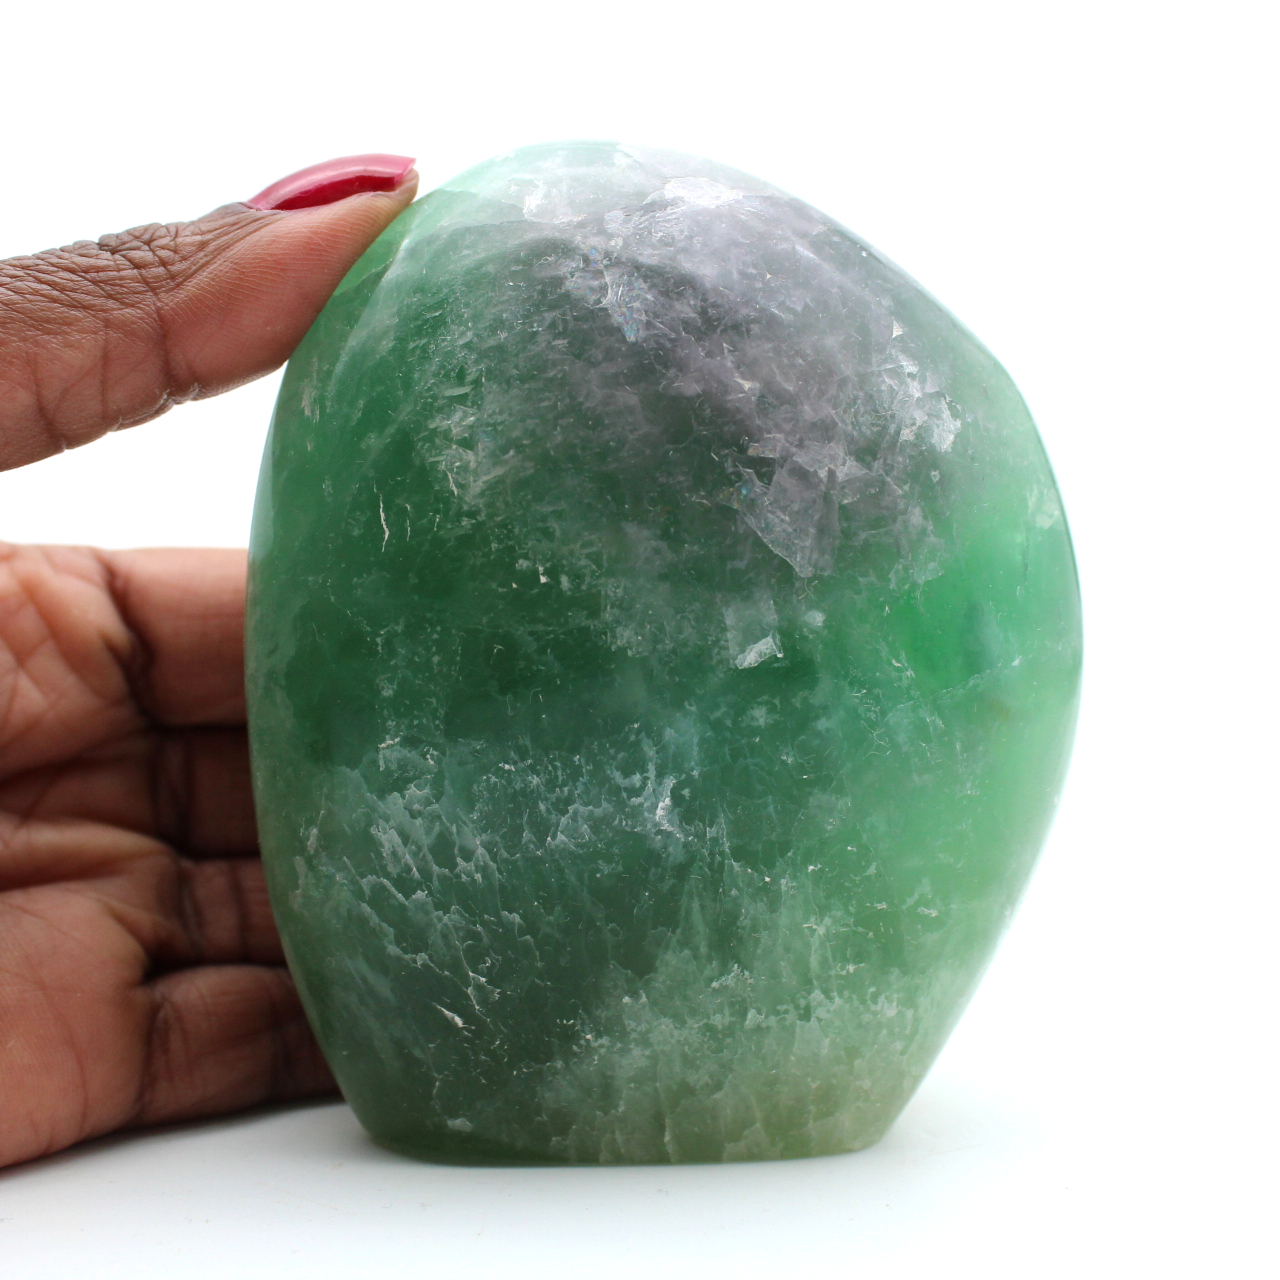 Piedra pulida fluorita verde